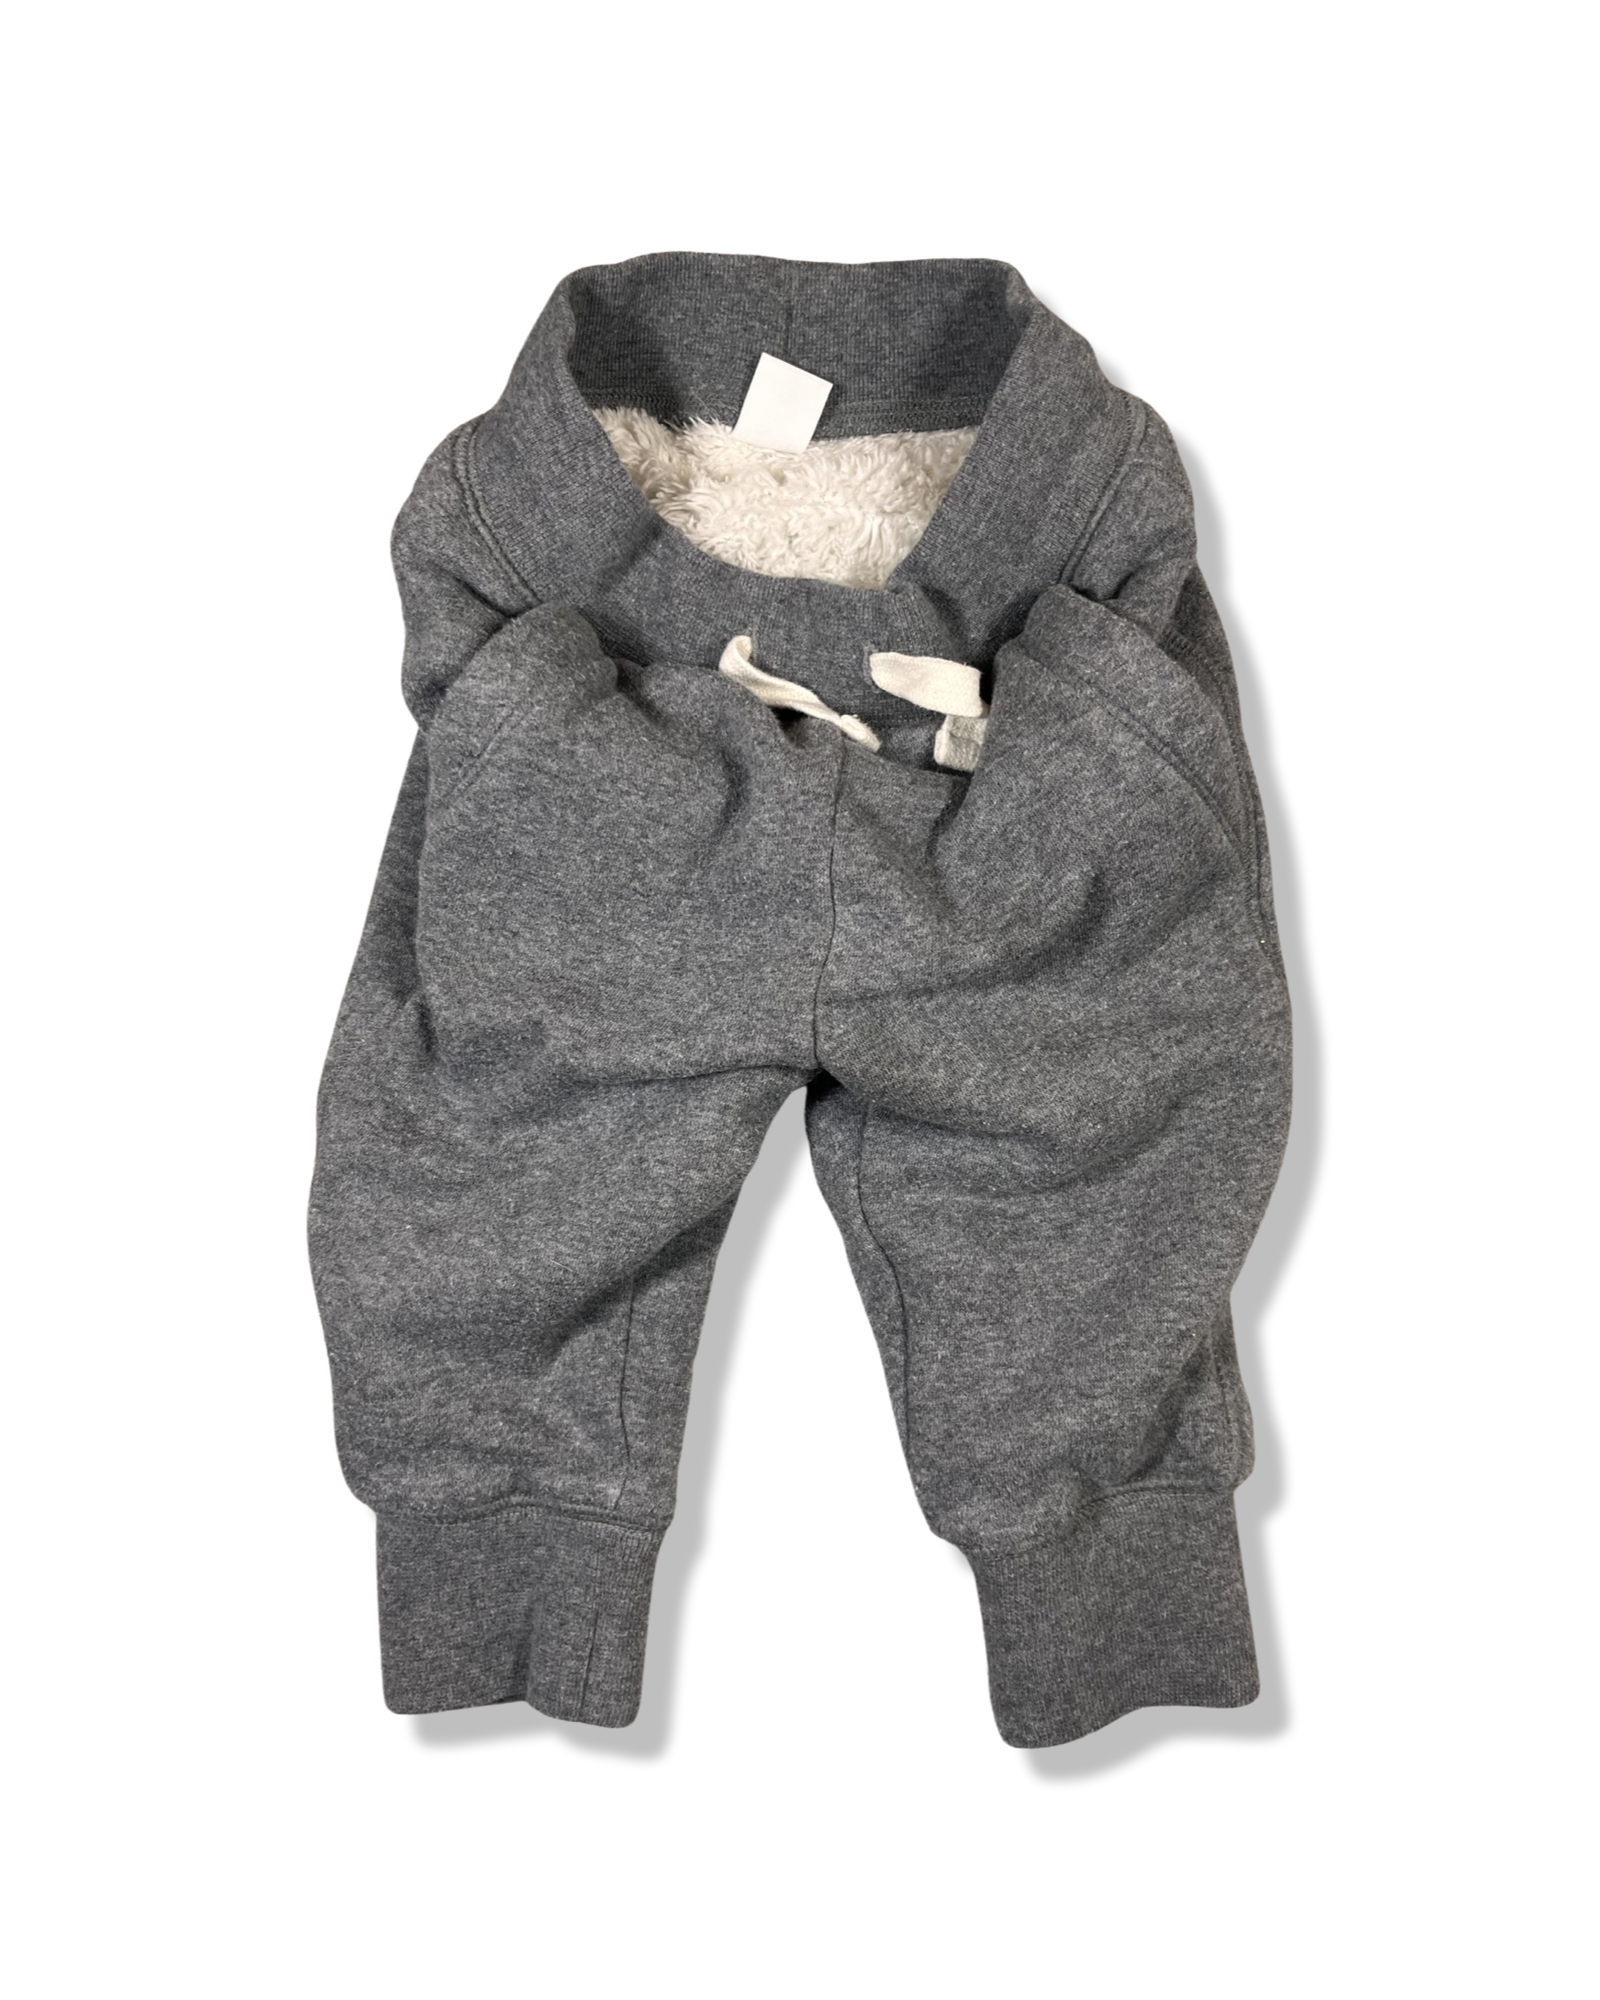 GAP Fleece Lined Grey Pants (12-18M)